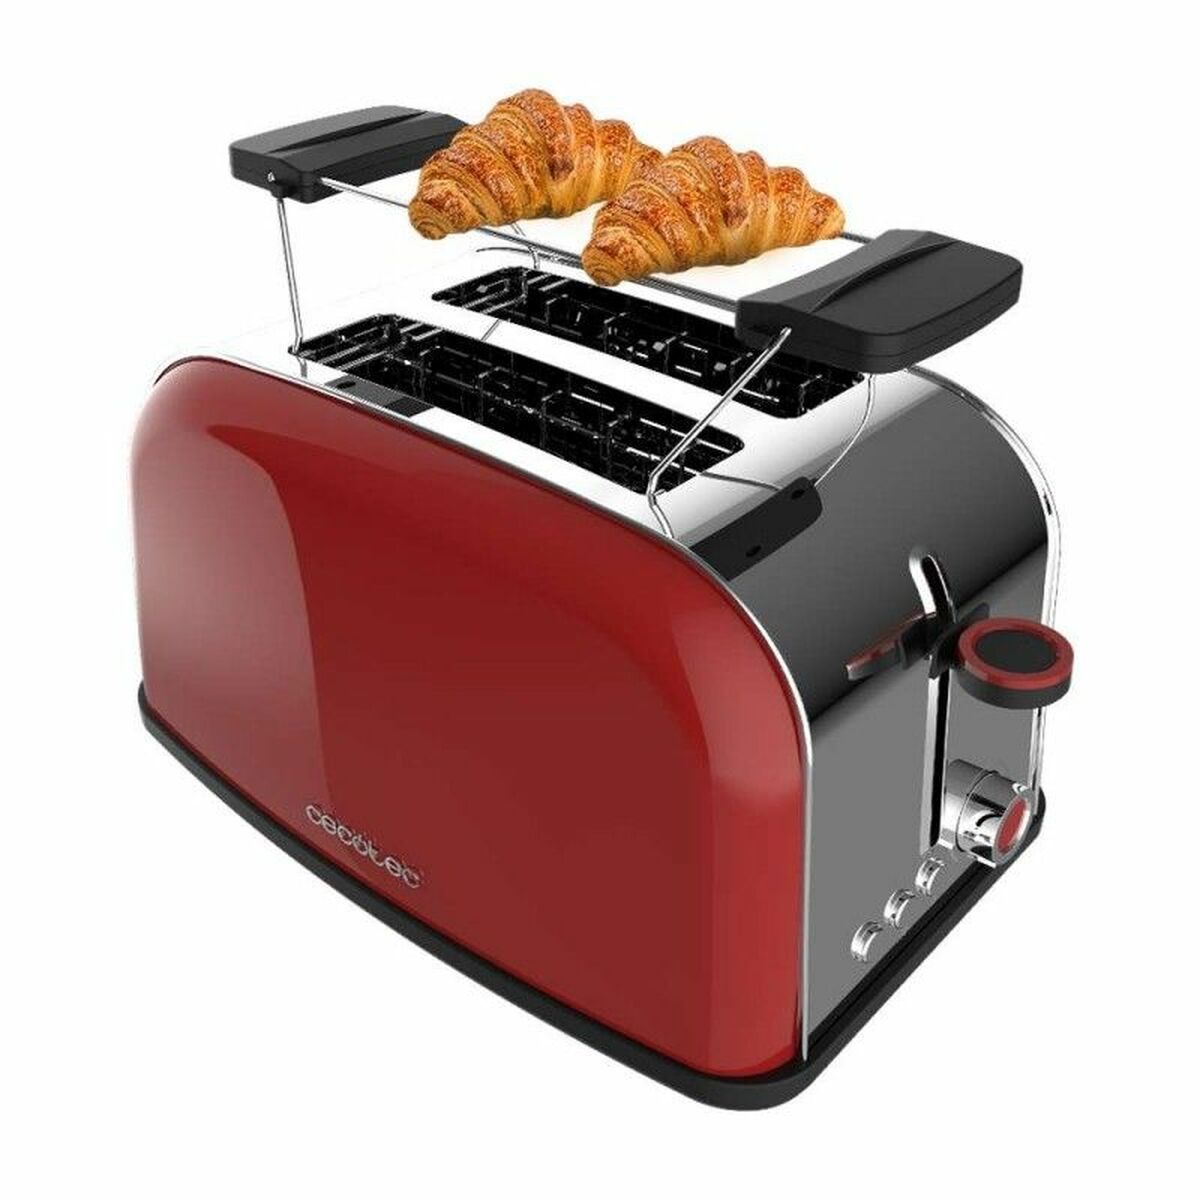 Toaster Cecotec Toastin' time 850 850 W - CA International  